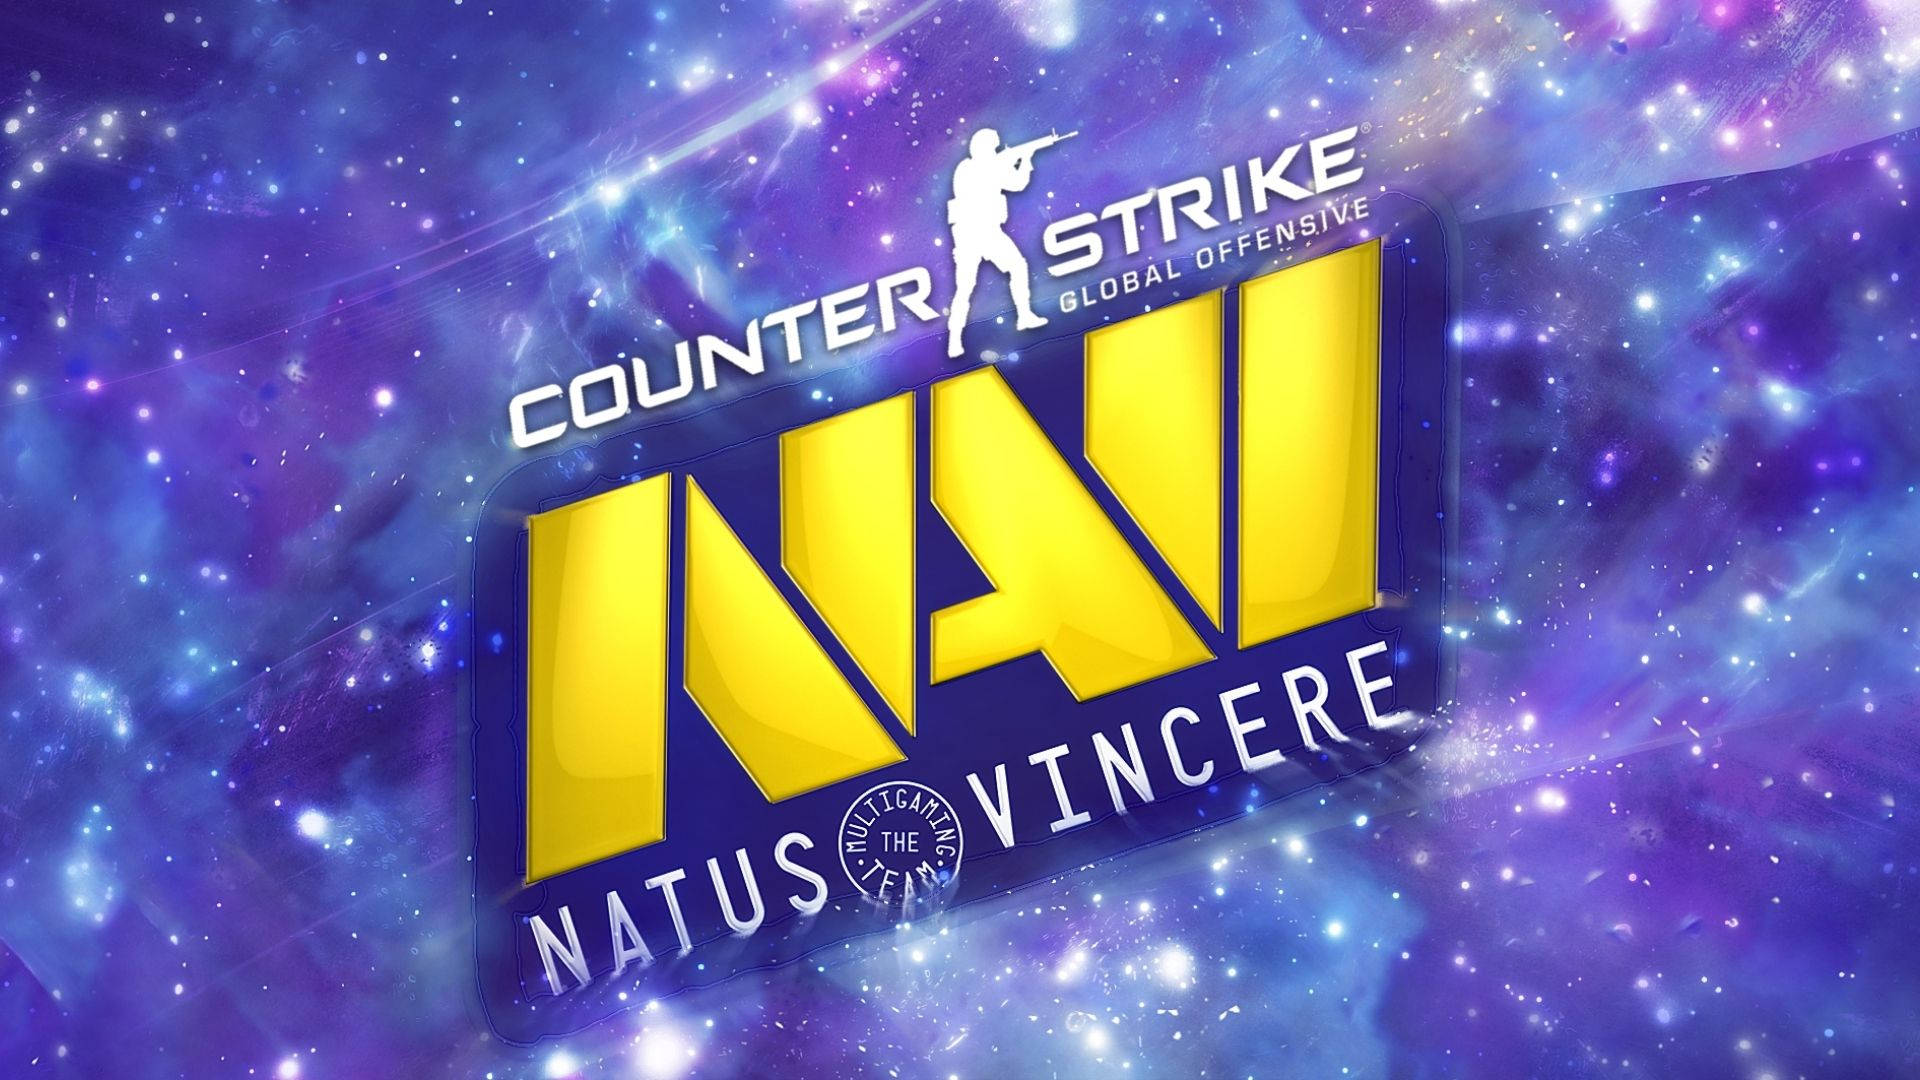 Dazzling Natus Vincere Logo Background